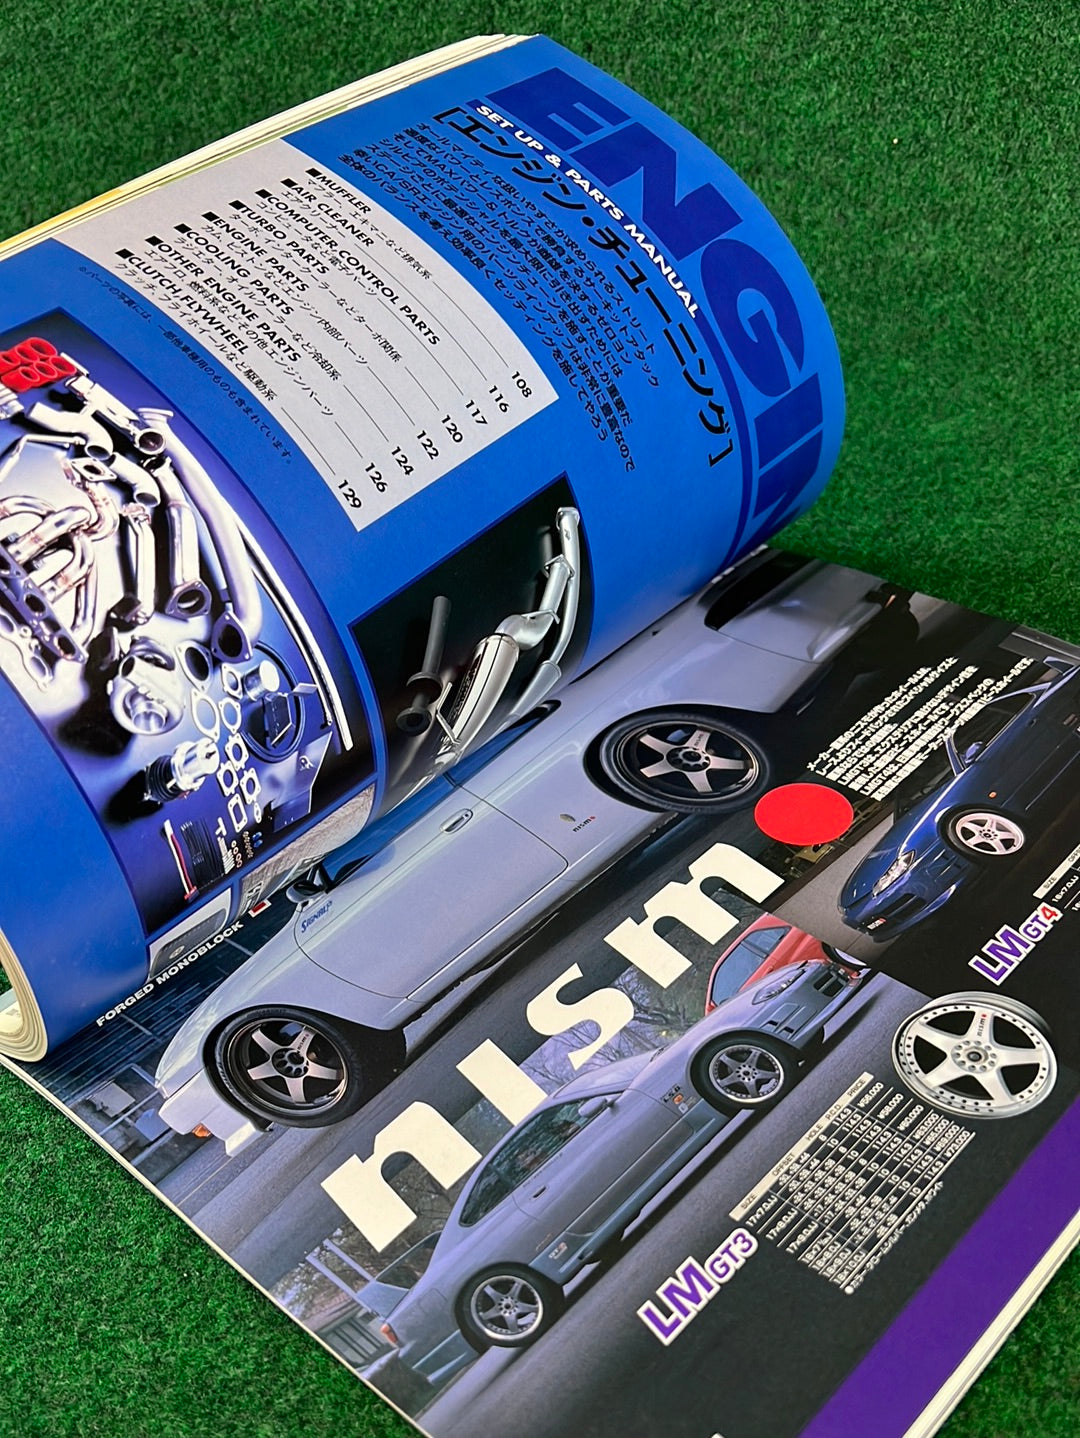 Hyper Rev Magazine - Nissan Silvia - Vol. 49 No.3